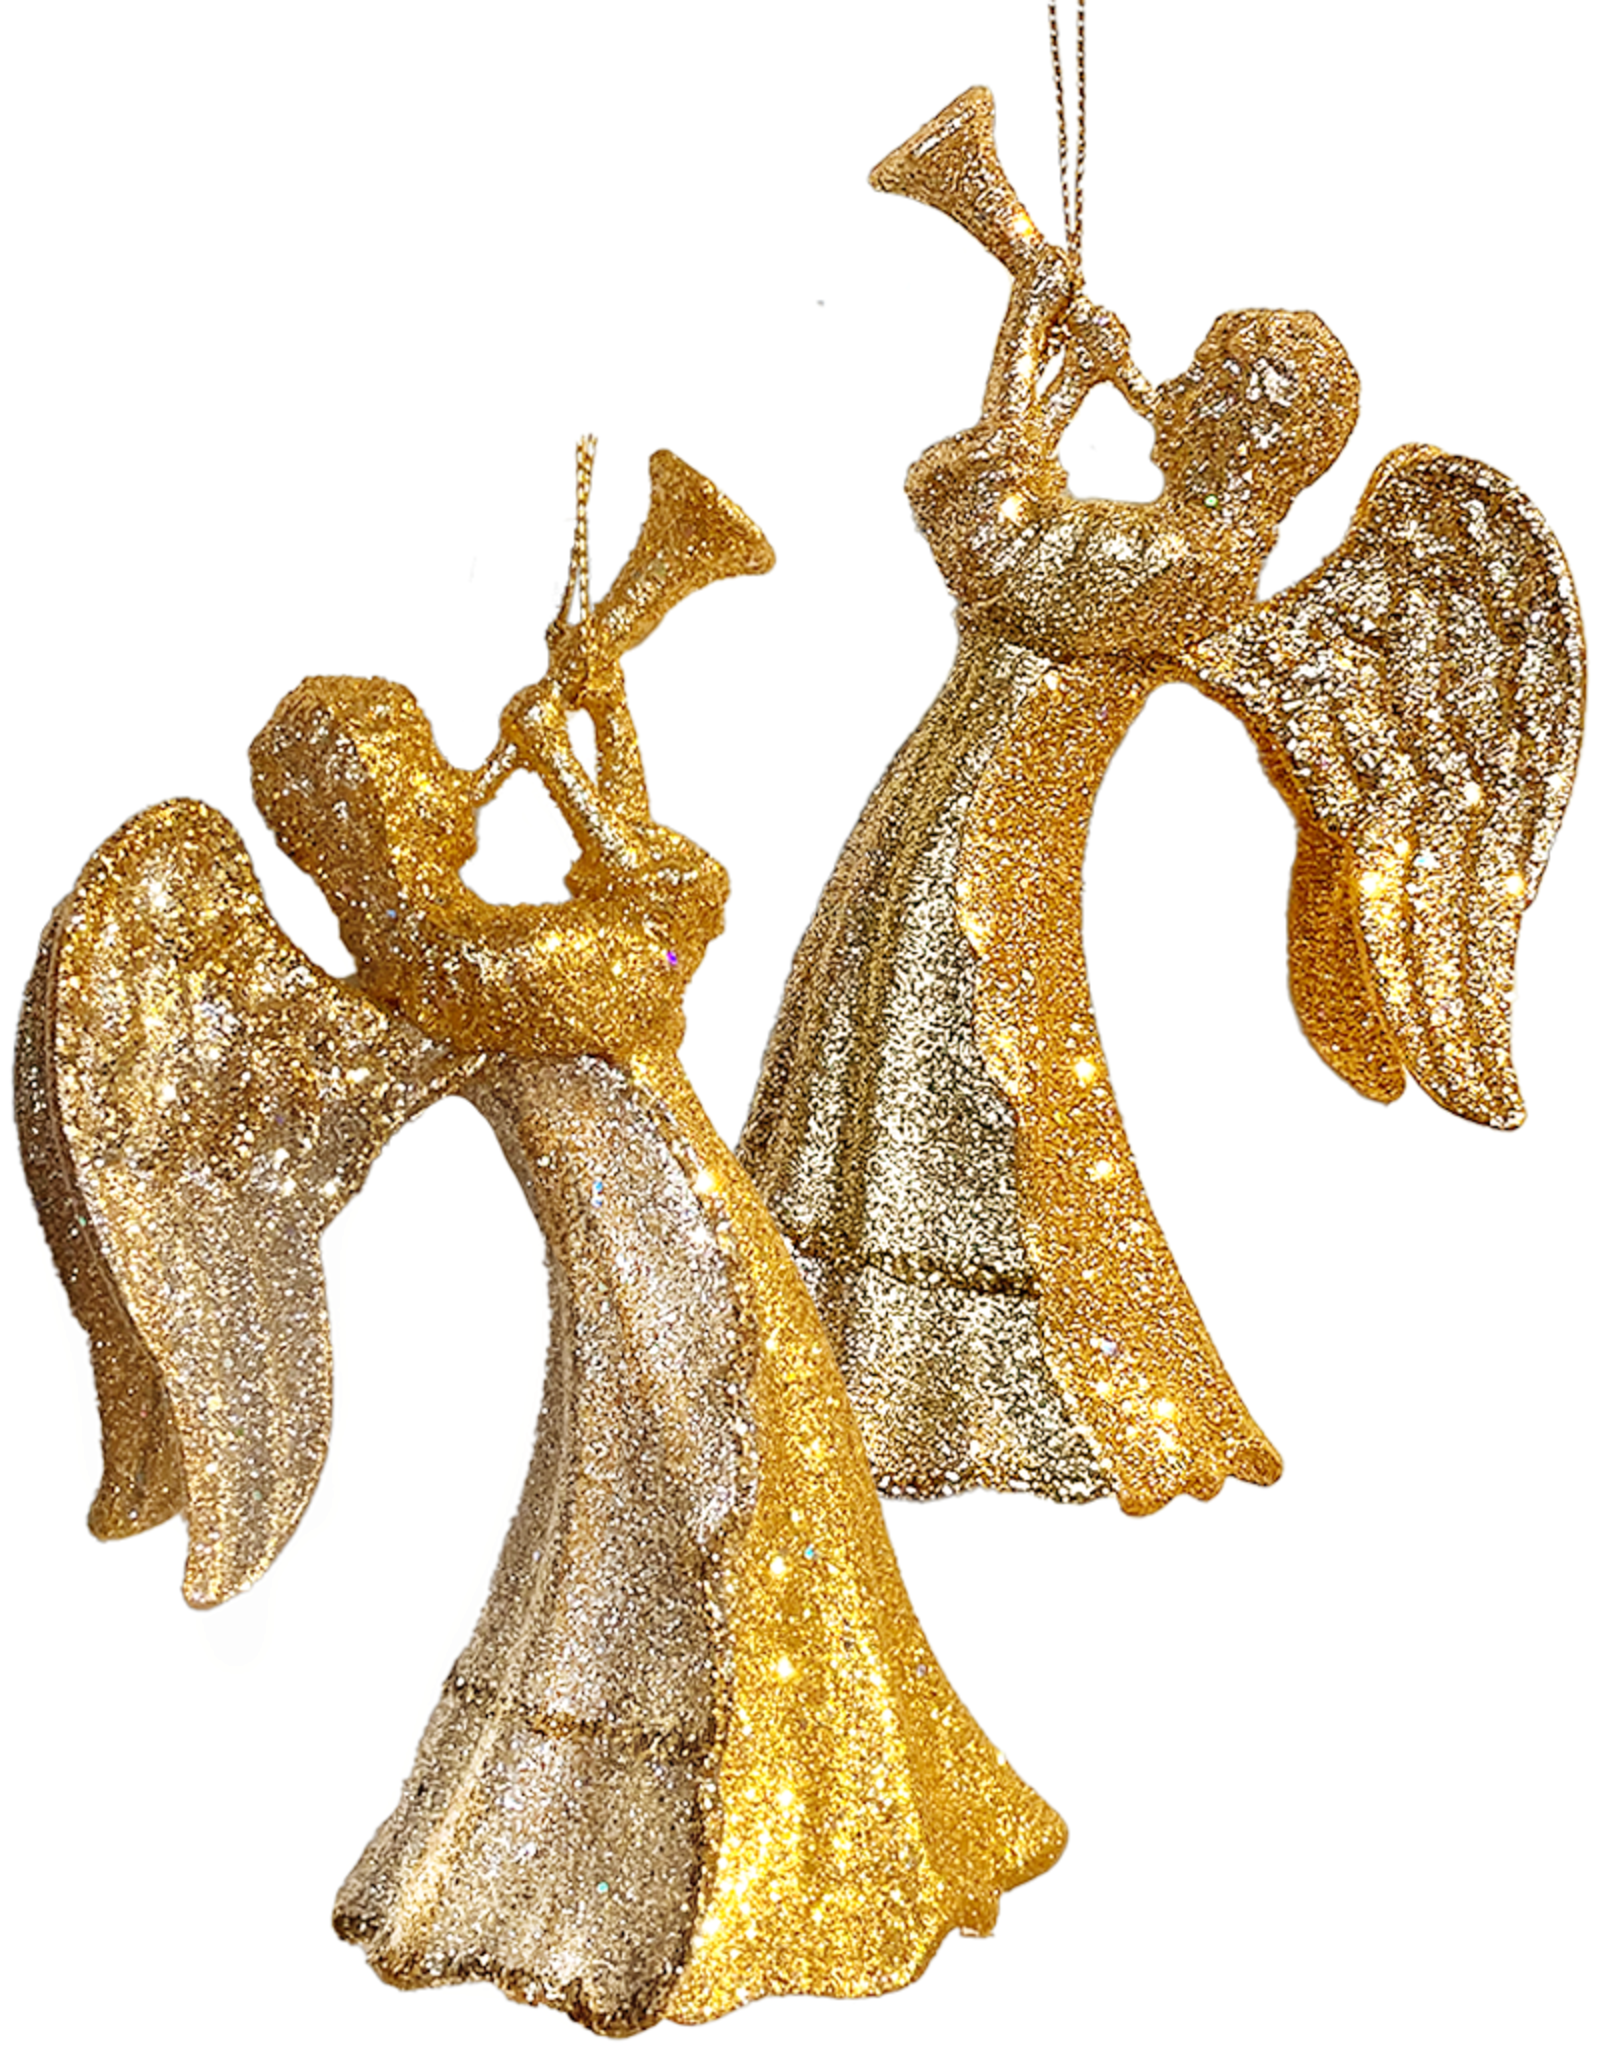 Kurt Adler Gold Glittered Angel Ornaments 2 Assorted